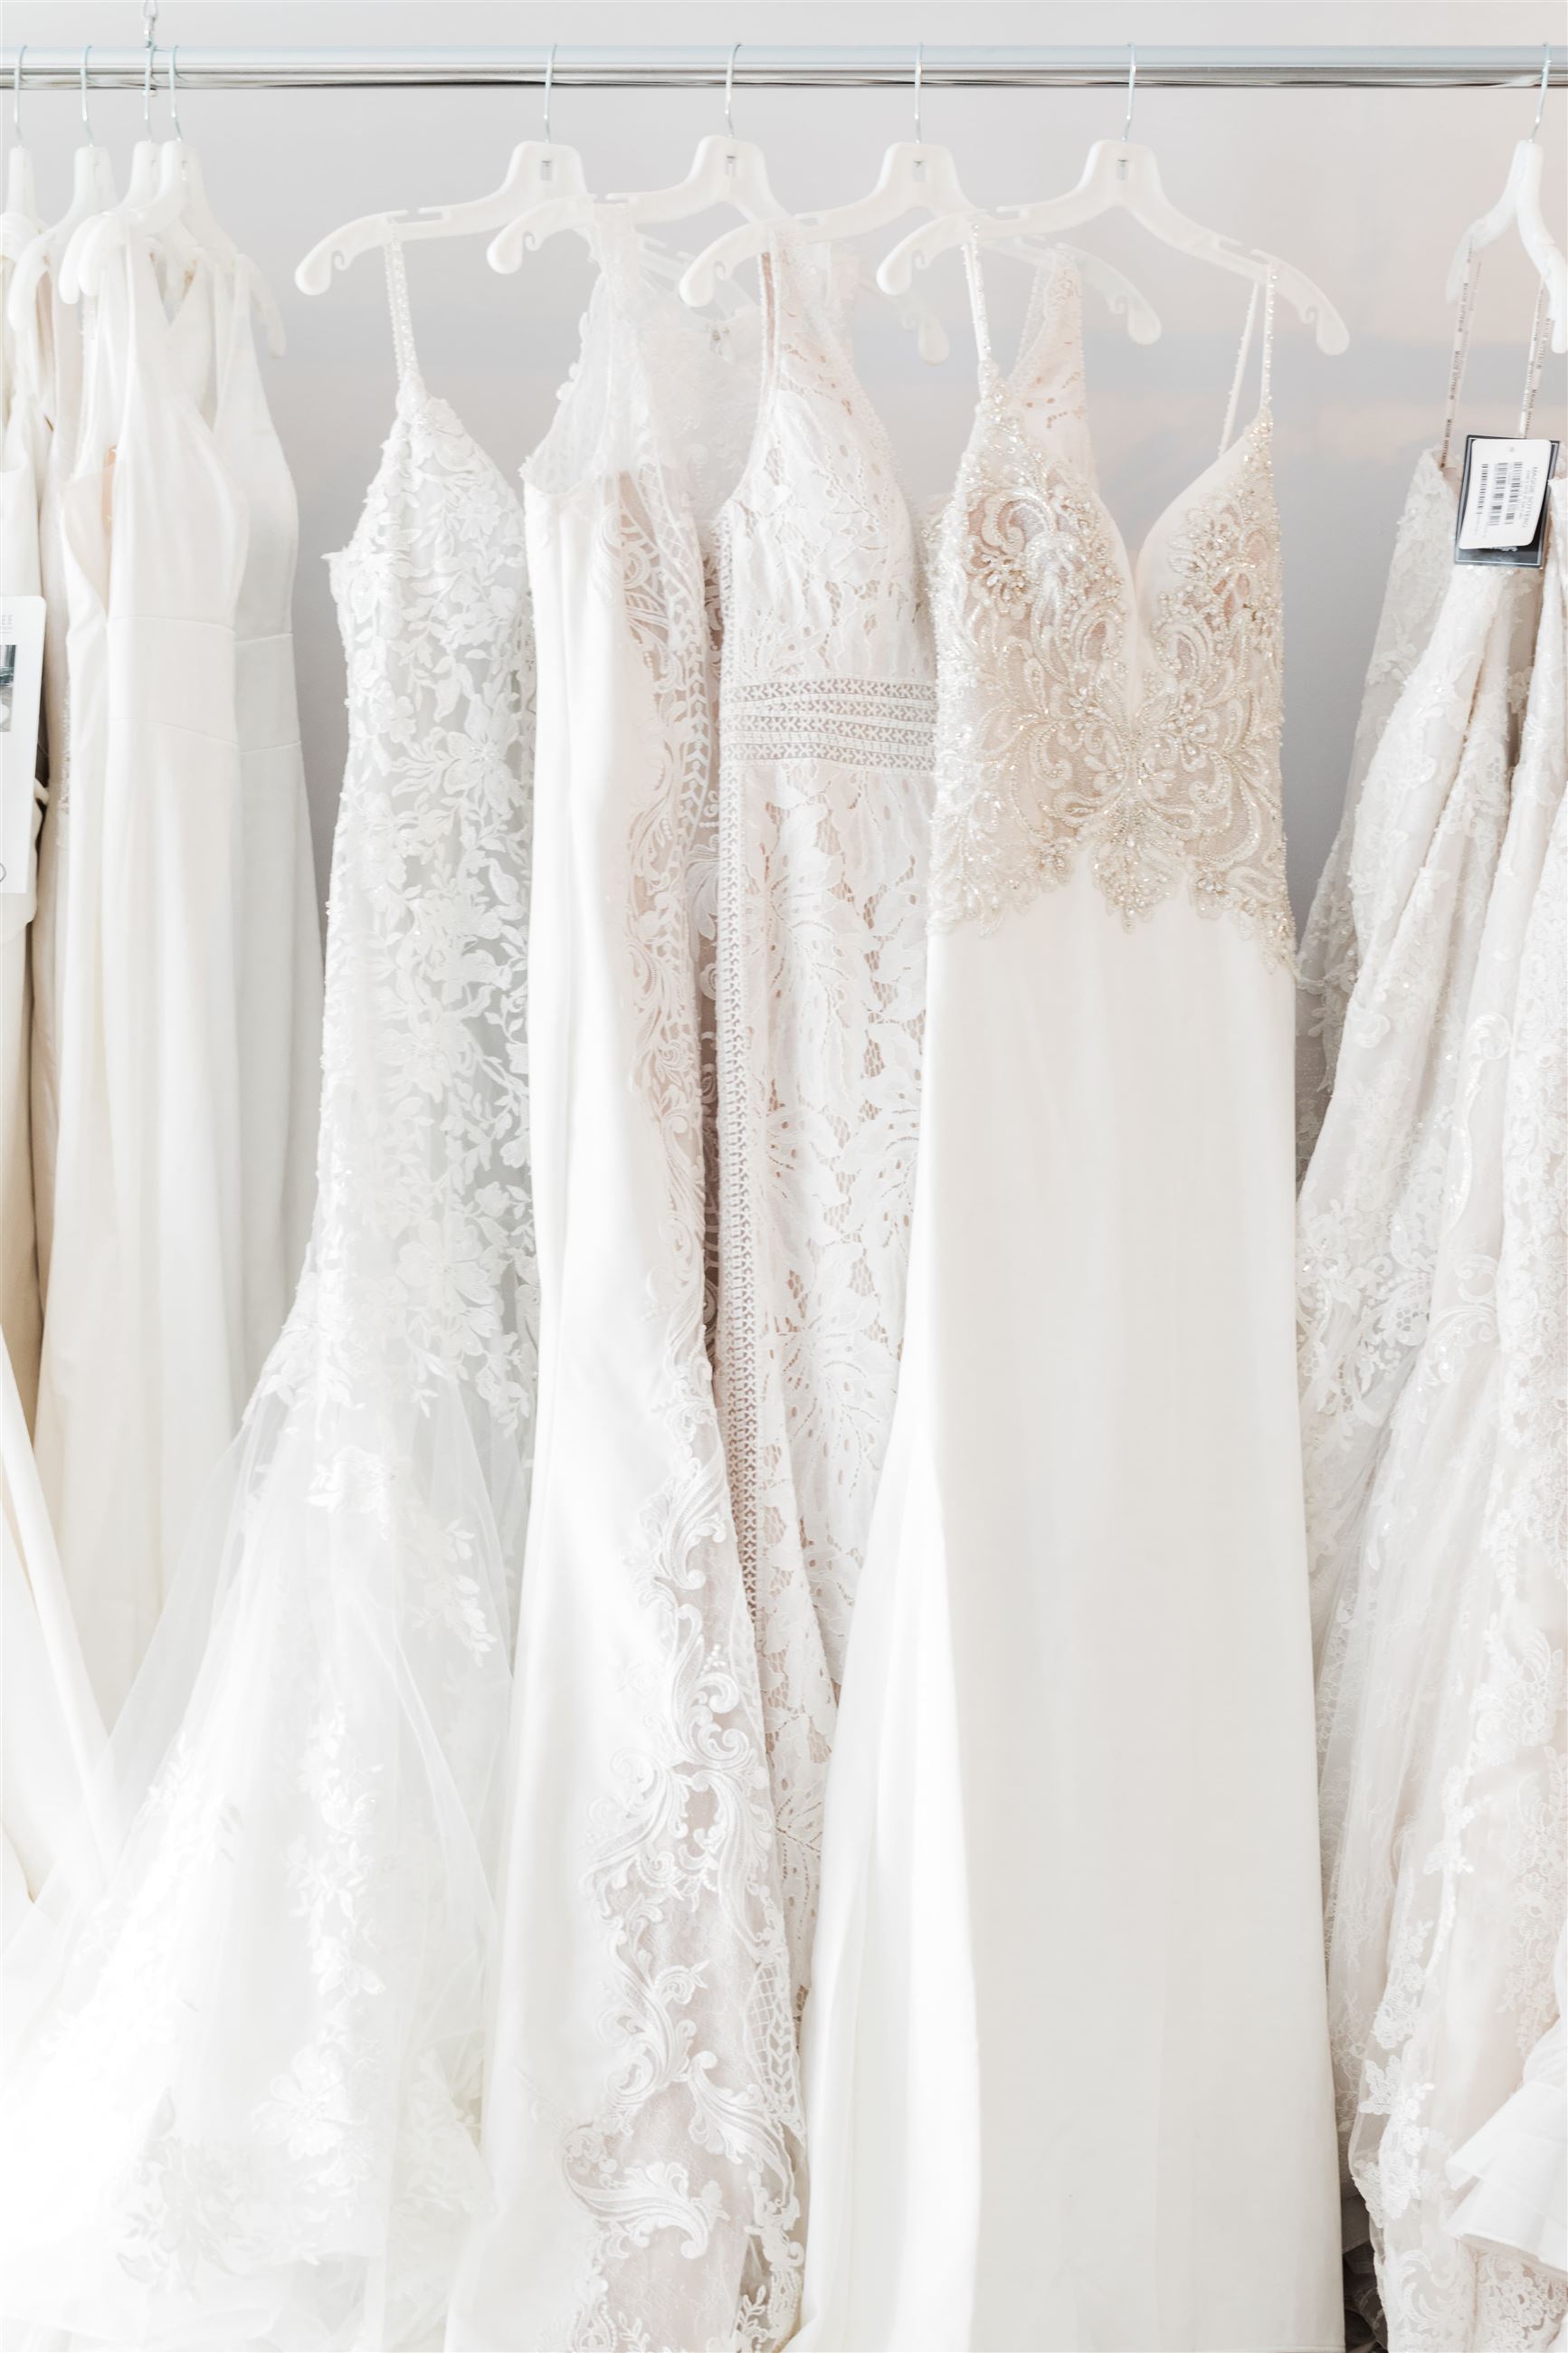 White dresses